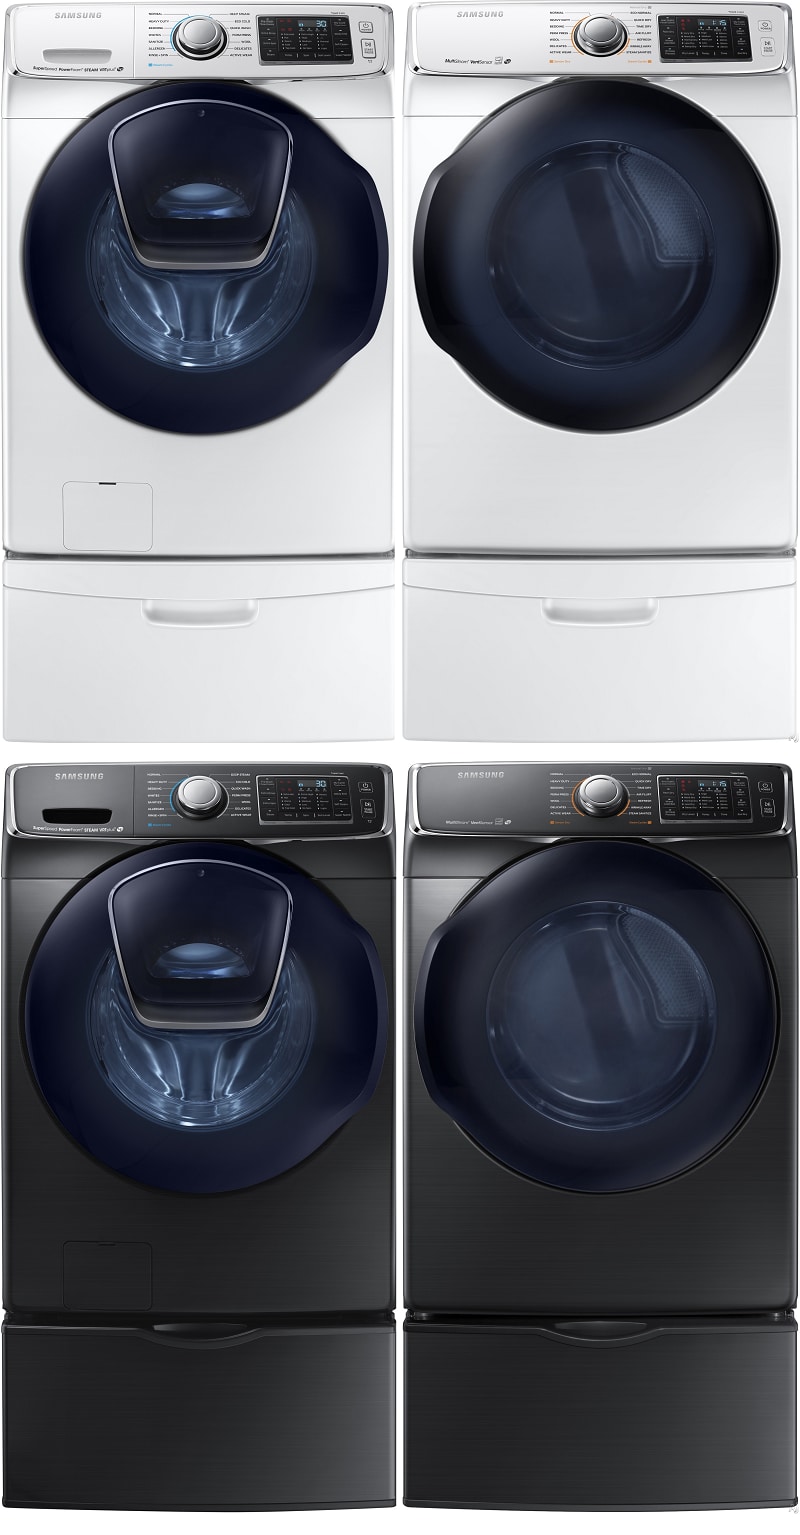 LG vs. Samsung Washer & Dryer Set Comparison Review